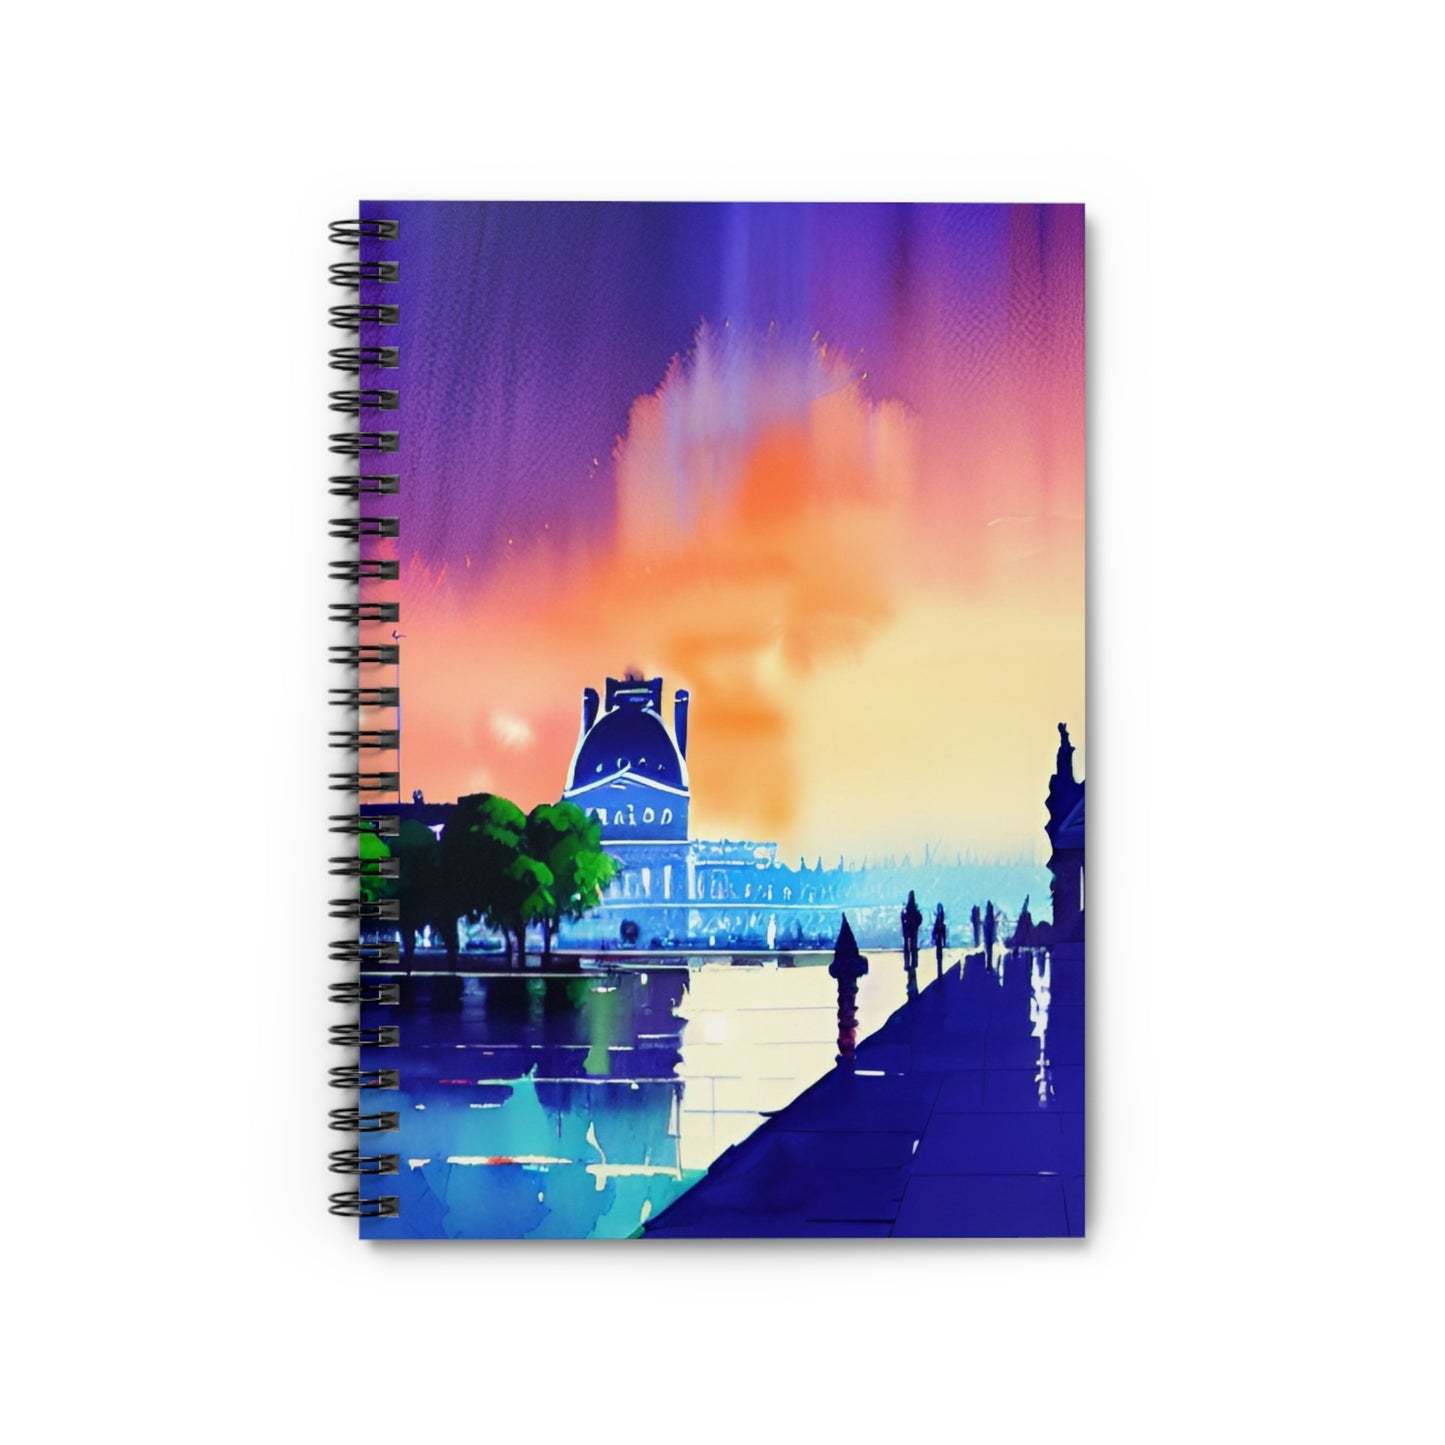 Paris, Spiral Notebook, Ruled Line